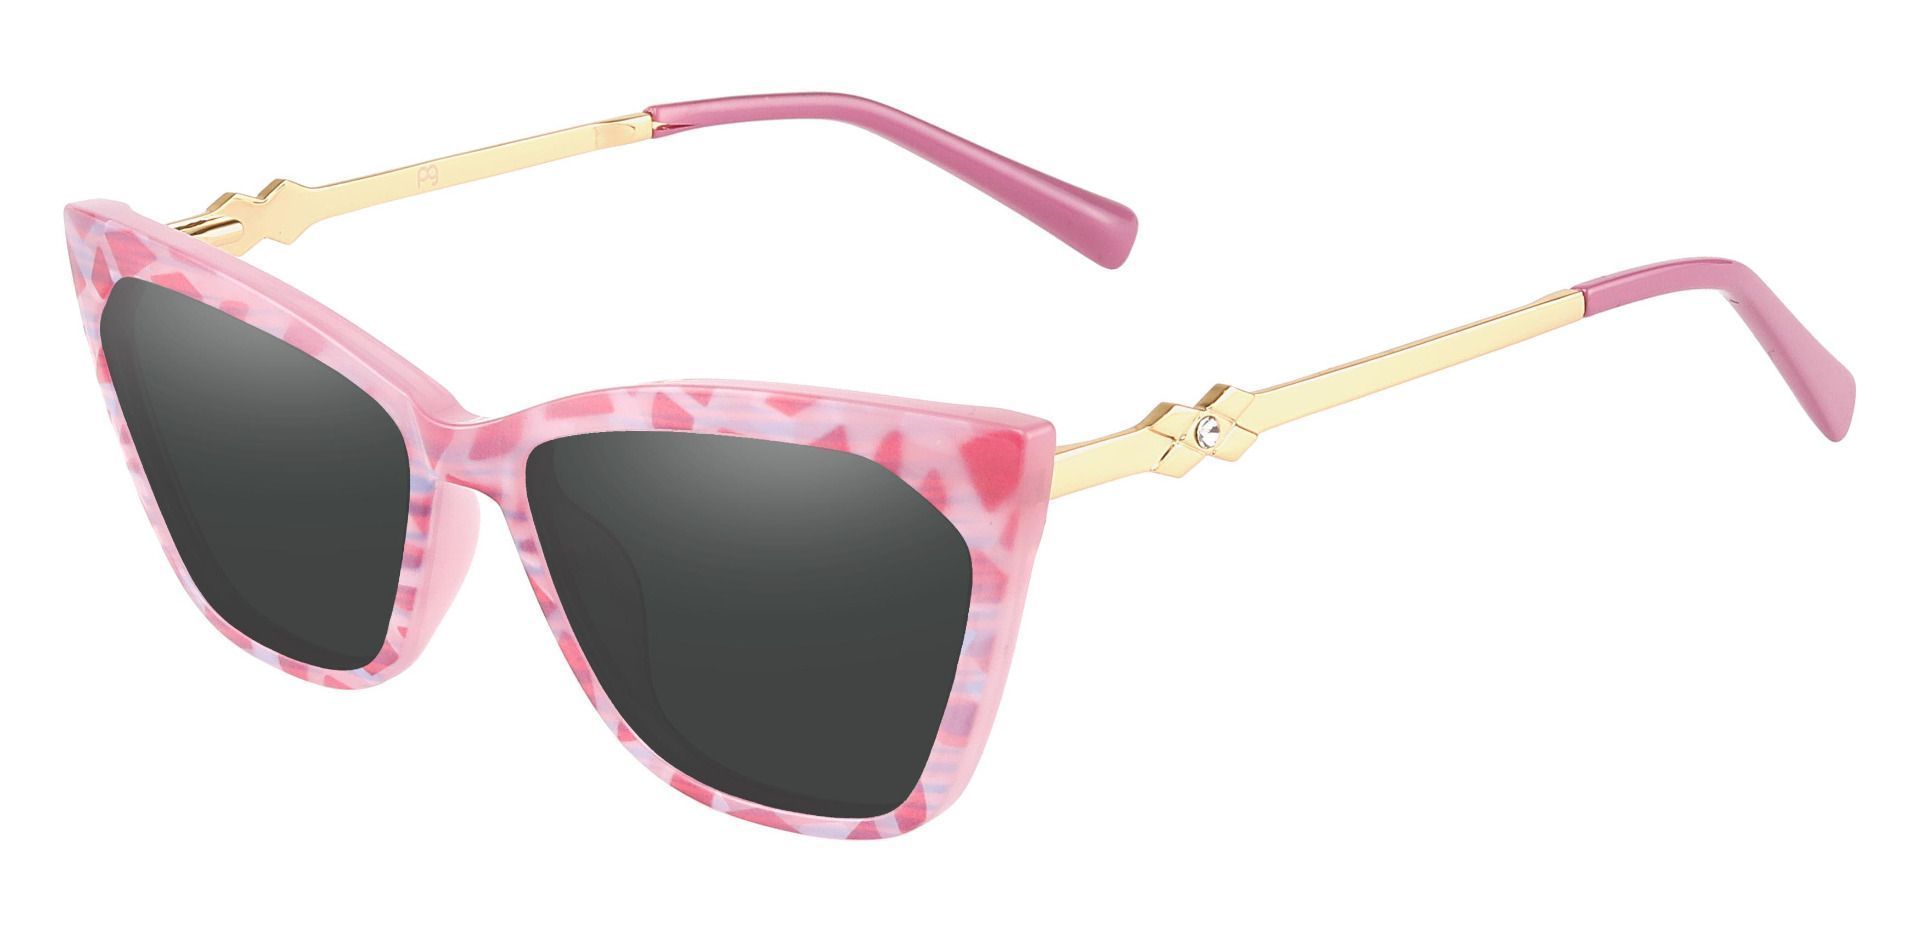 Addison Cat Eye Progressive Sunglasses - Pink Frame With Gray Lenses